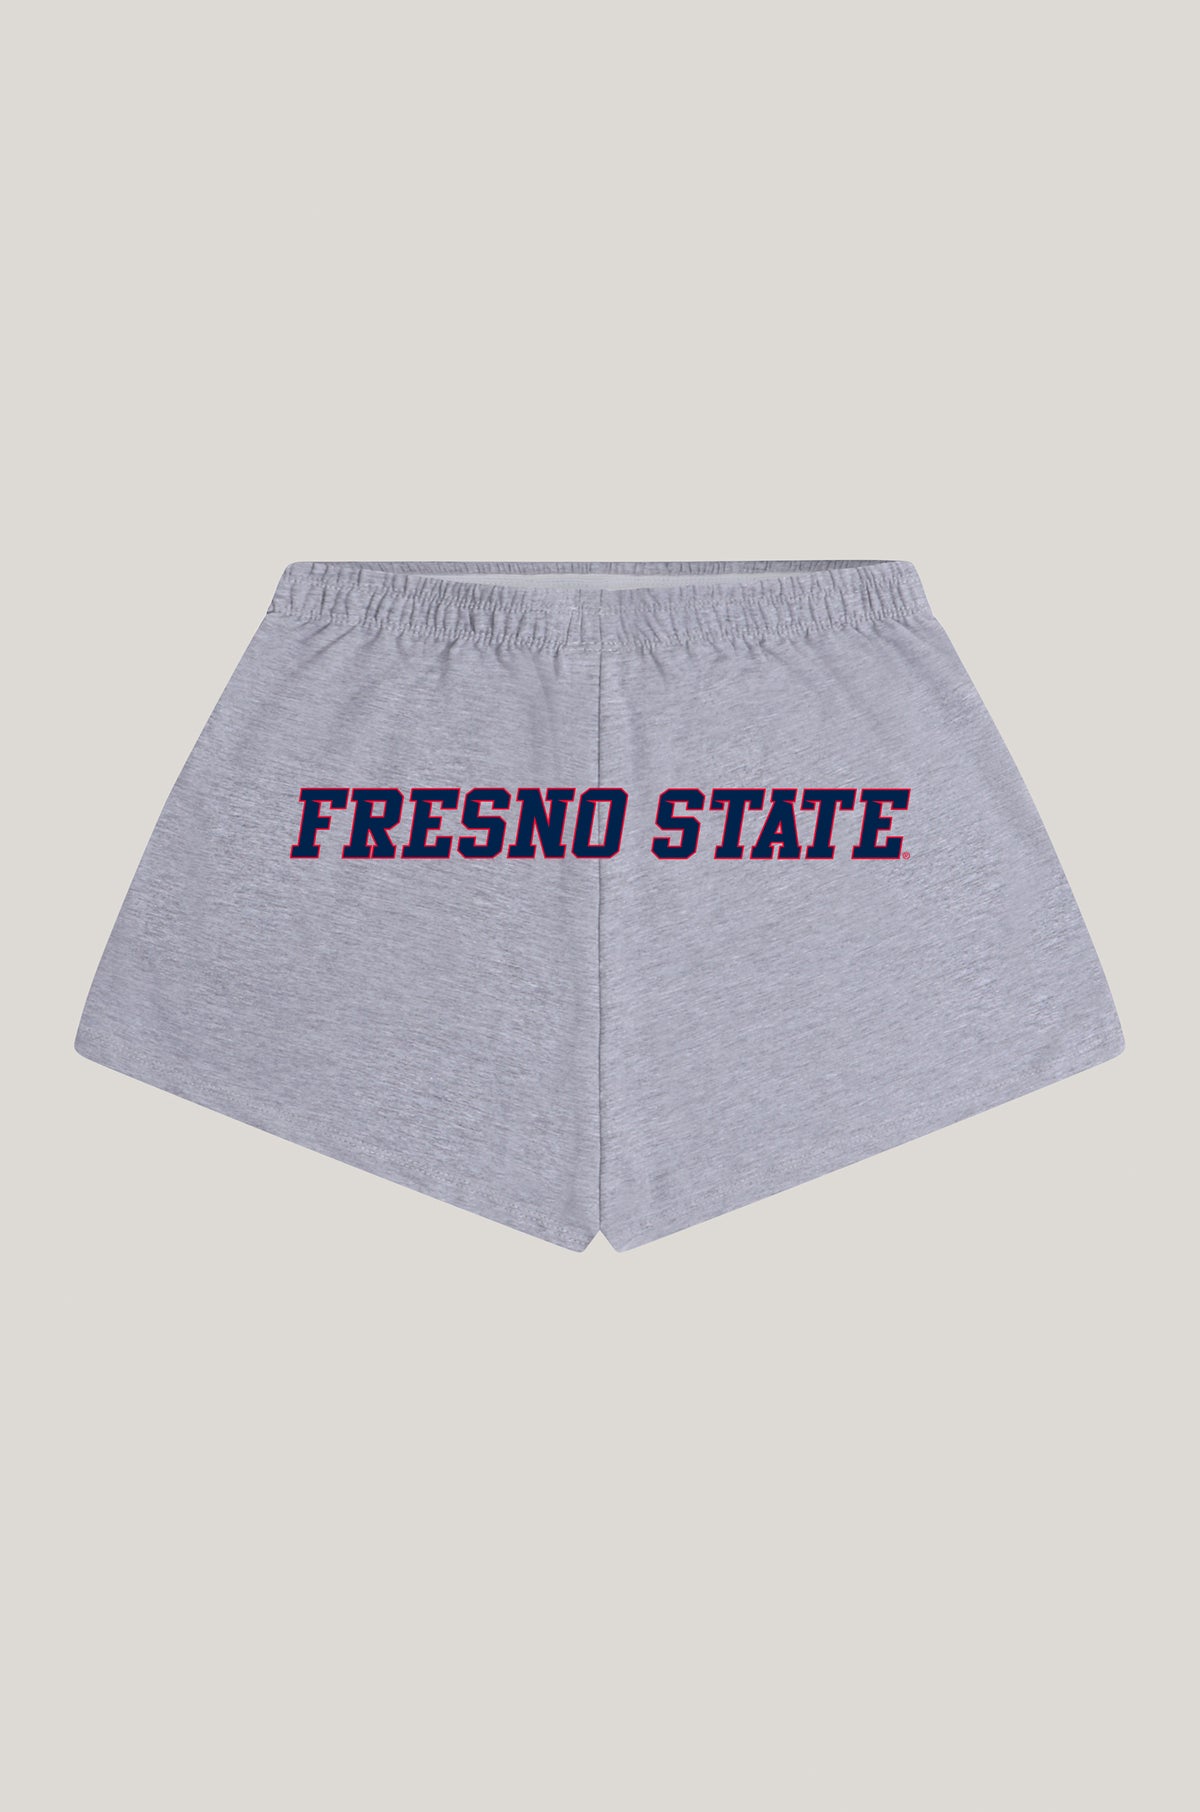 Fresno State P.E. Shorts